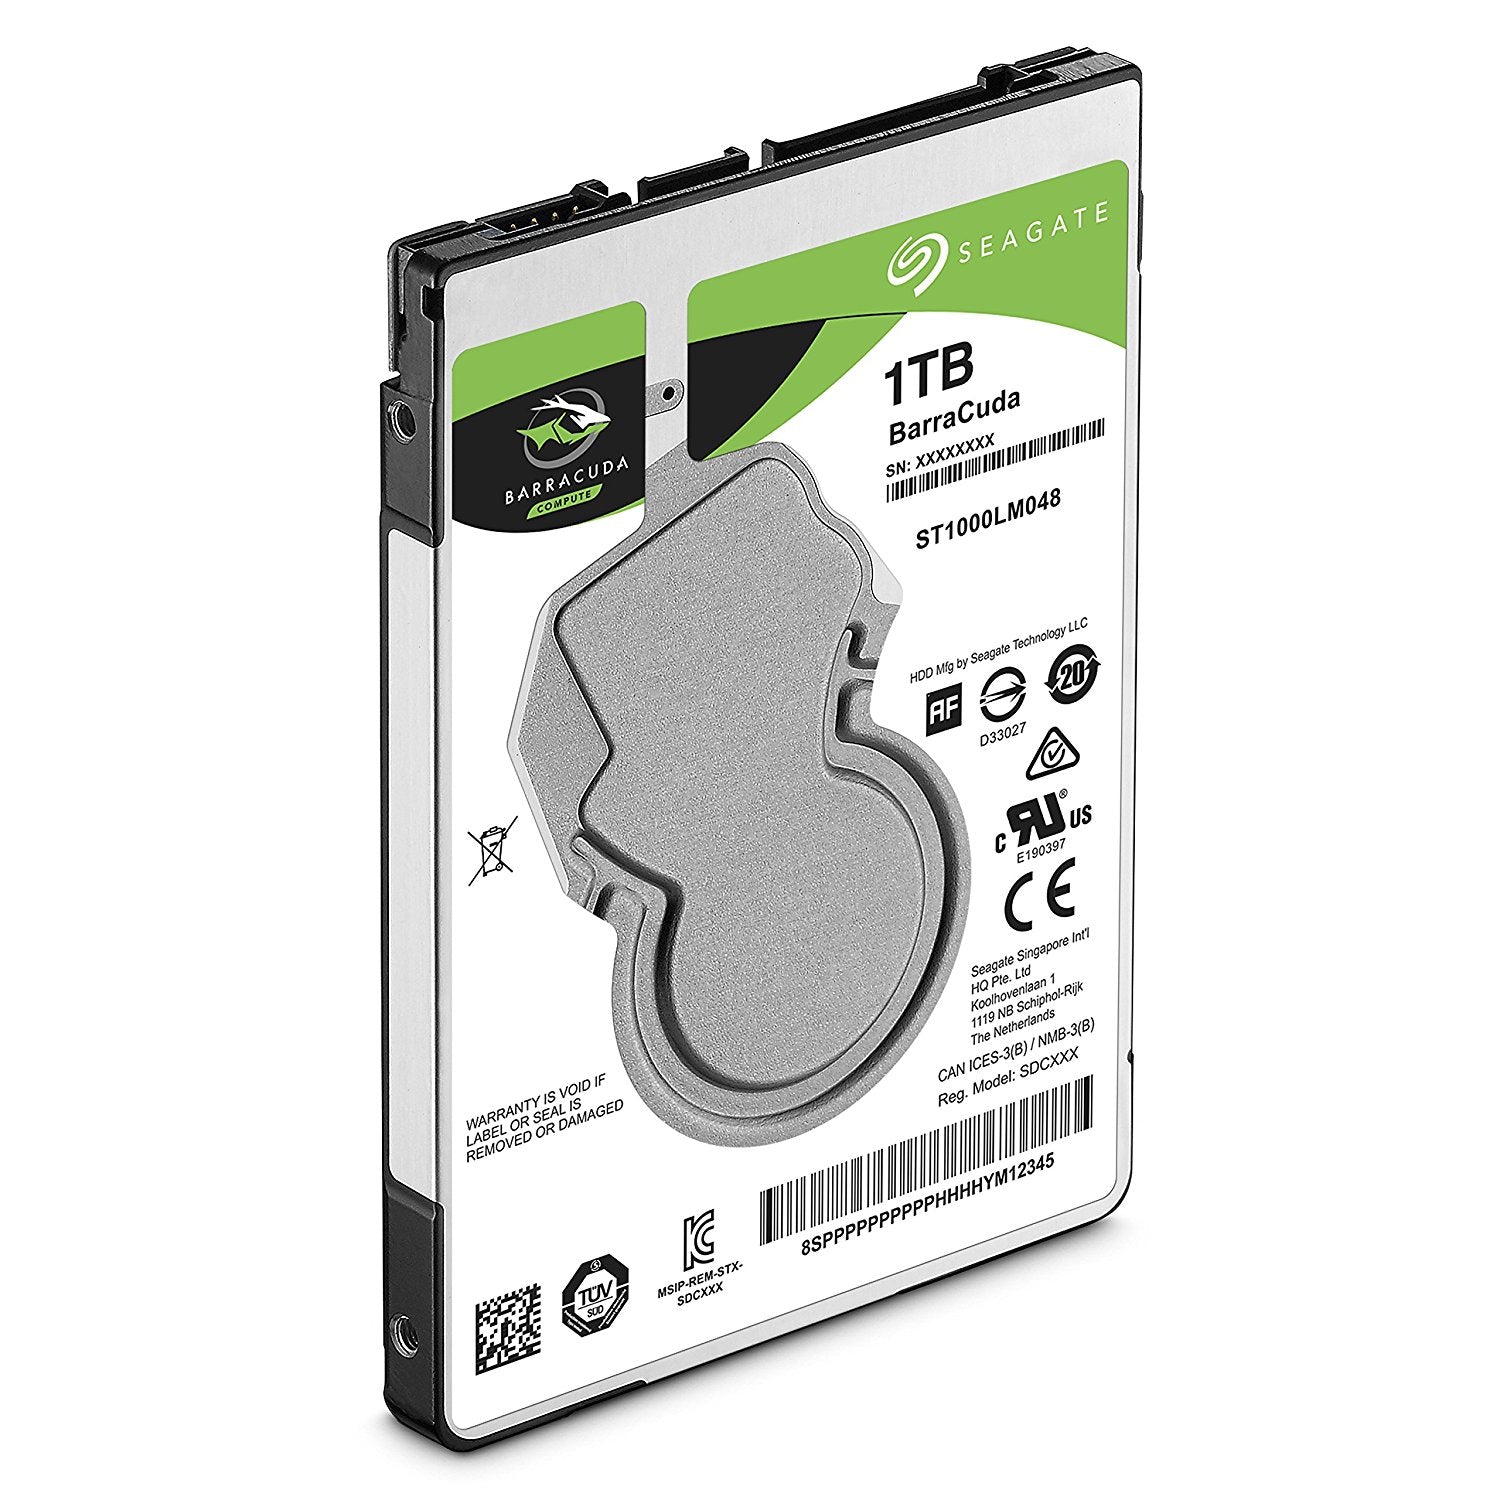 Seagate BARRACUDA 1 TB Laptop Internal Hard Disk Drive (ST1000LM048)